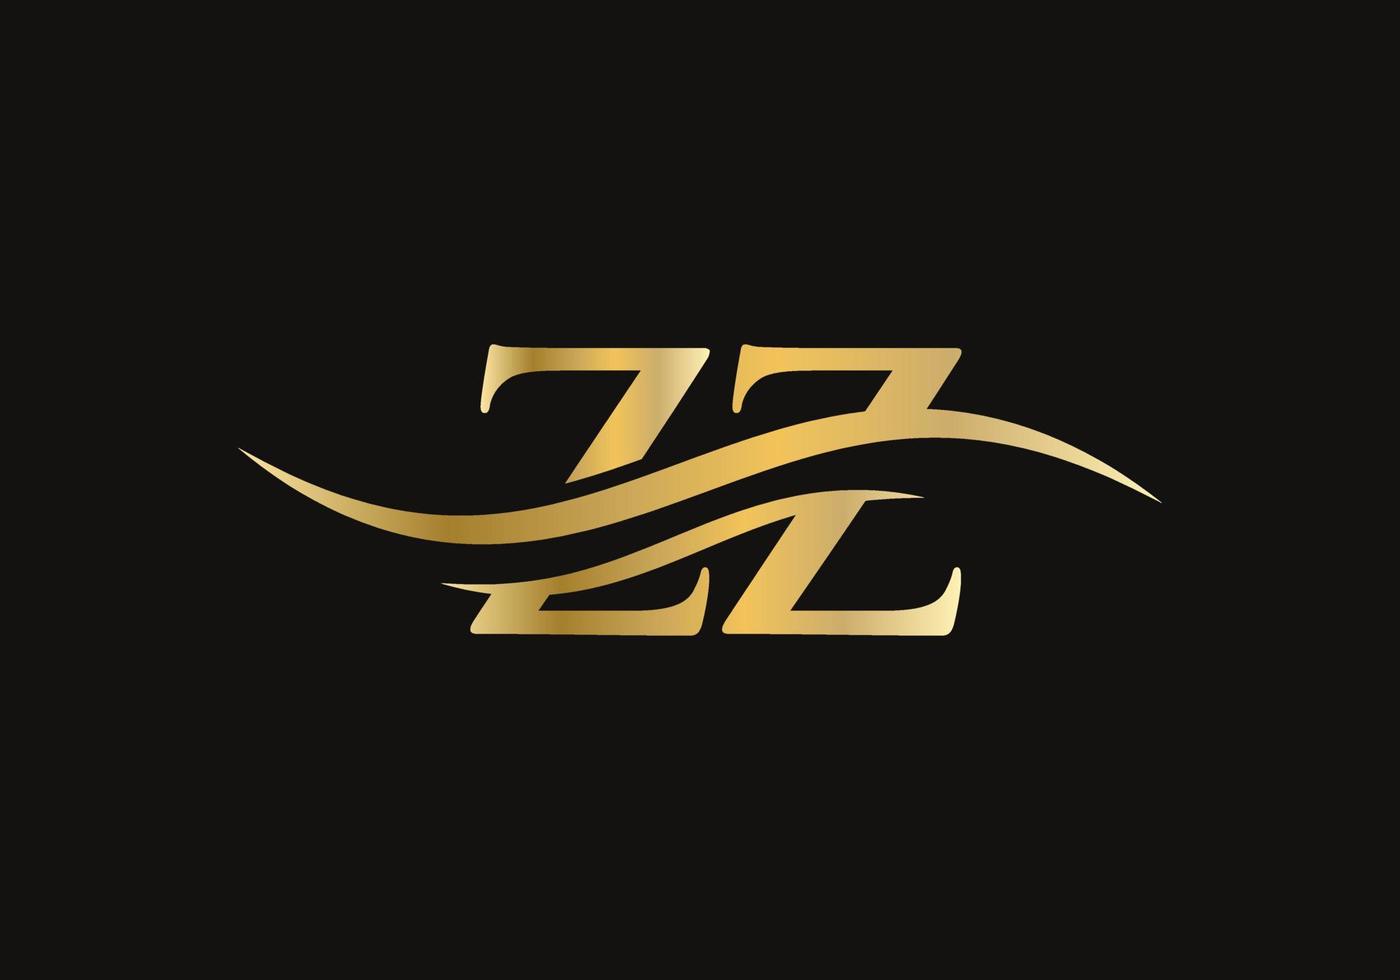 zz logo design vettore. swoosh lettera zz logo design. iniziale zz lettera connesso logo vettore modello